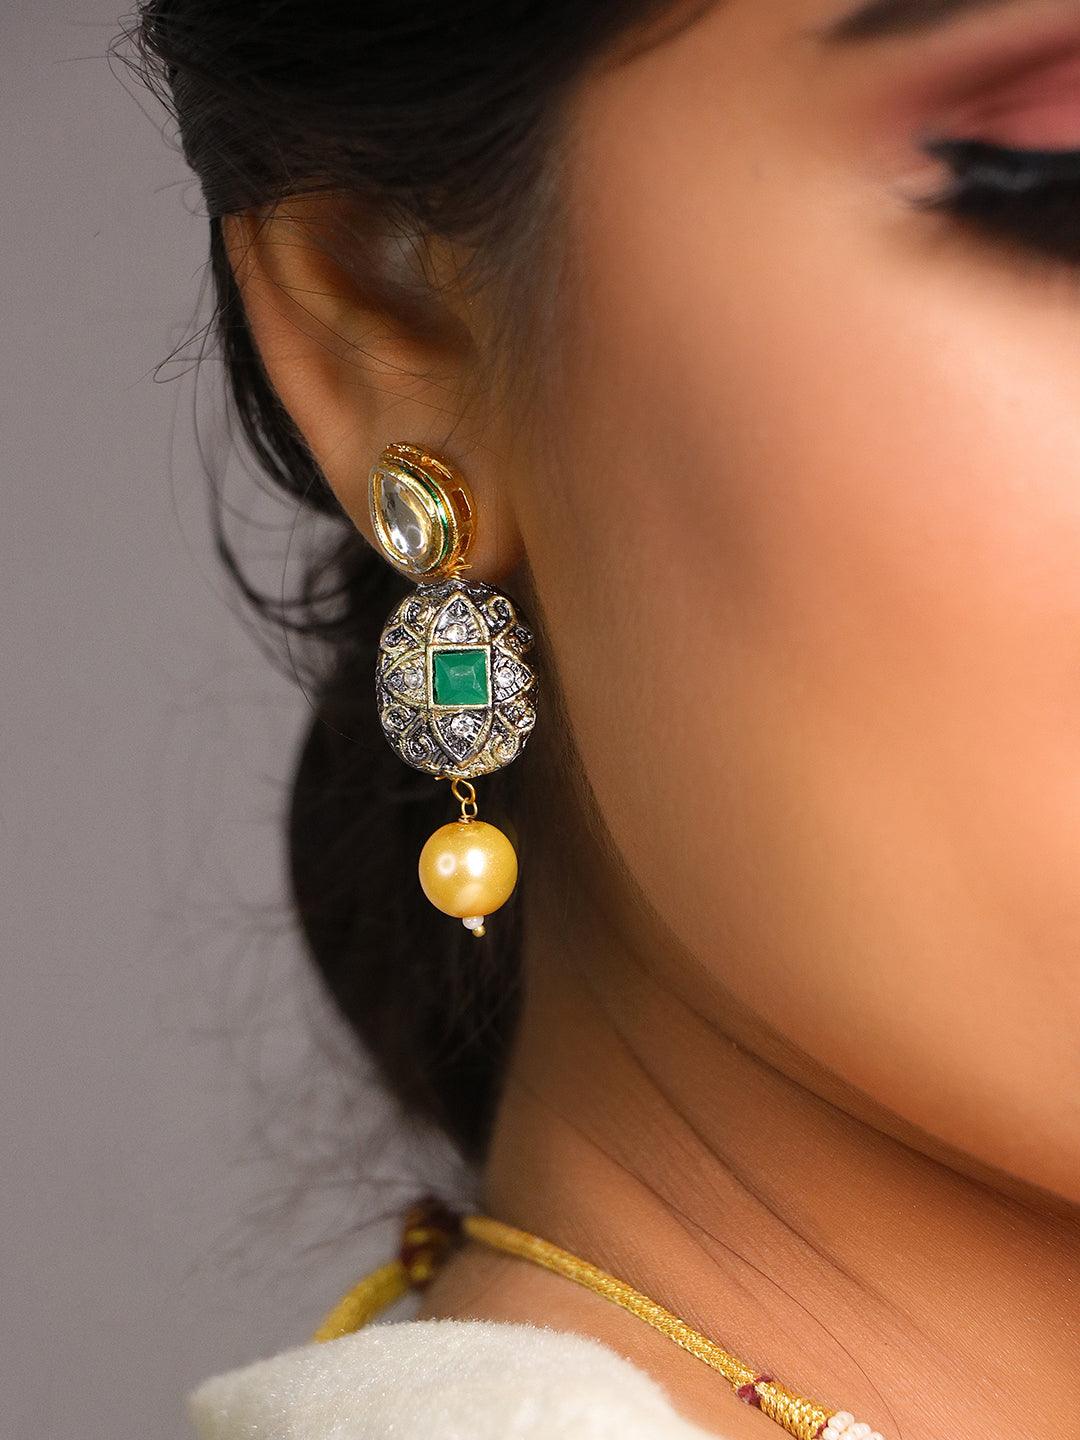 Ishhaara Double Layered Victorian Necklace